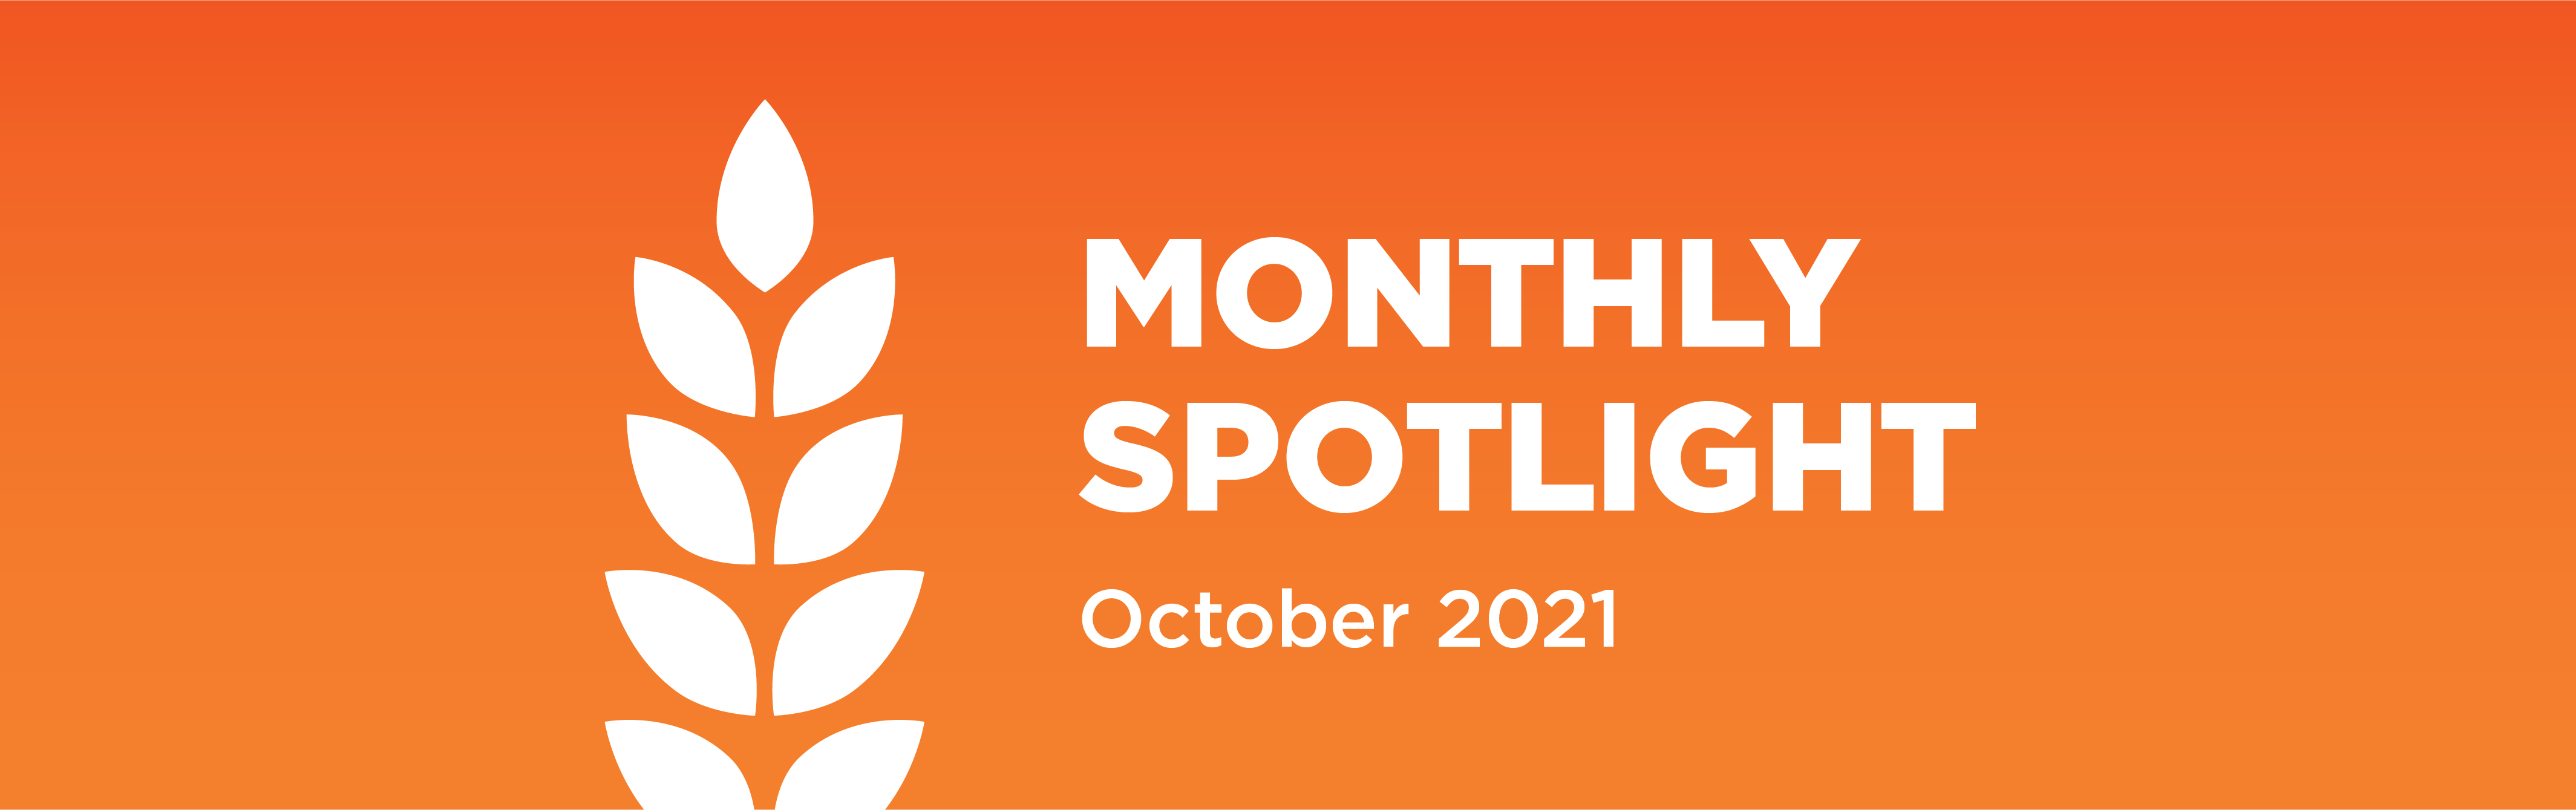 Feeding South Florida's Monthly Spotlight: October